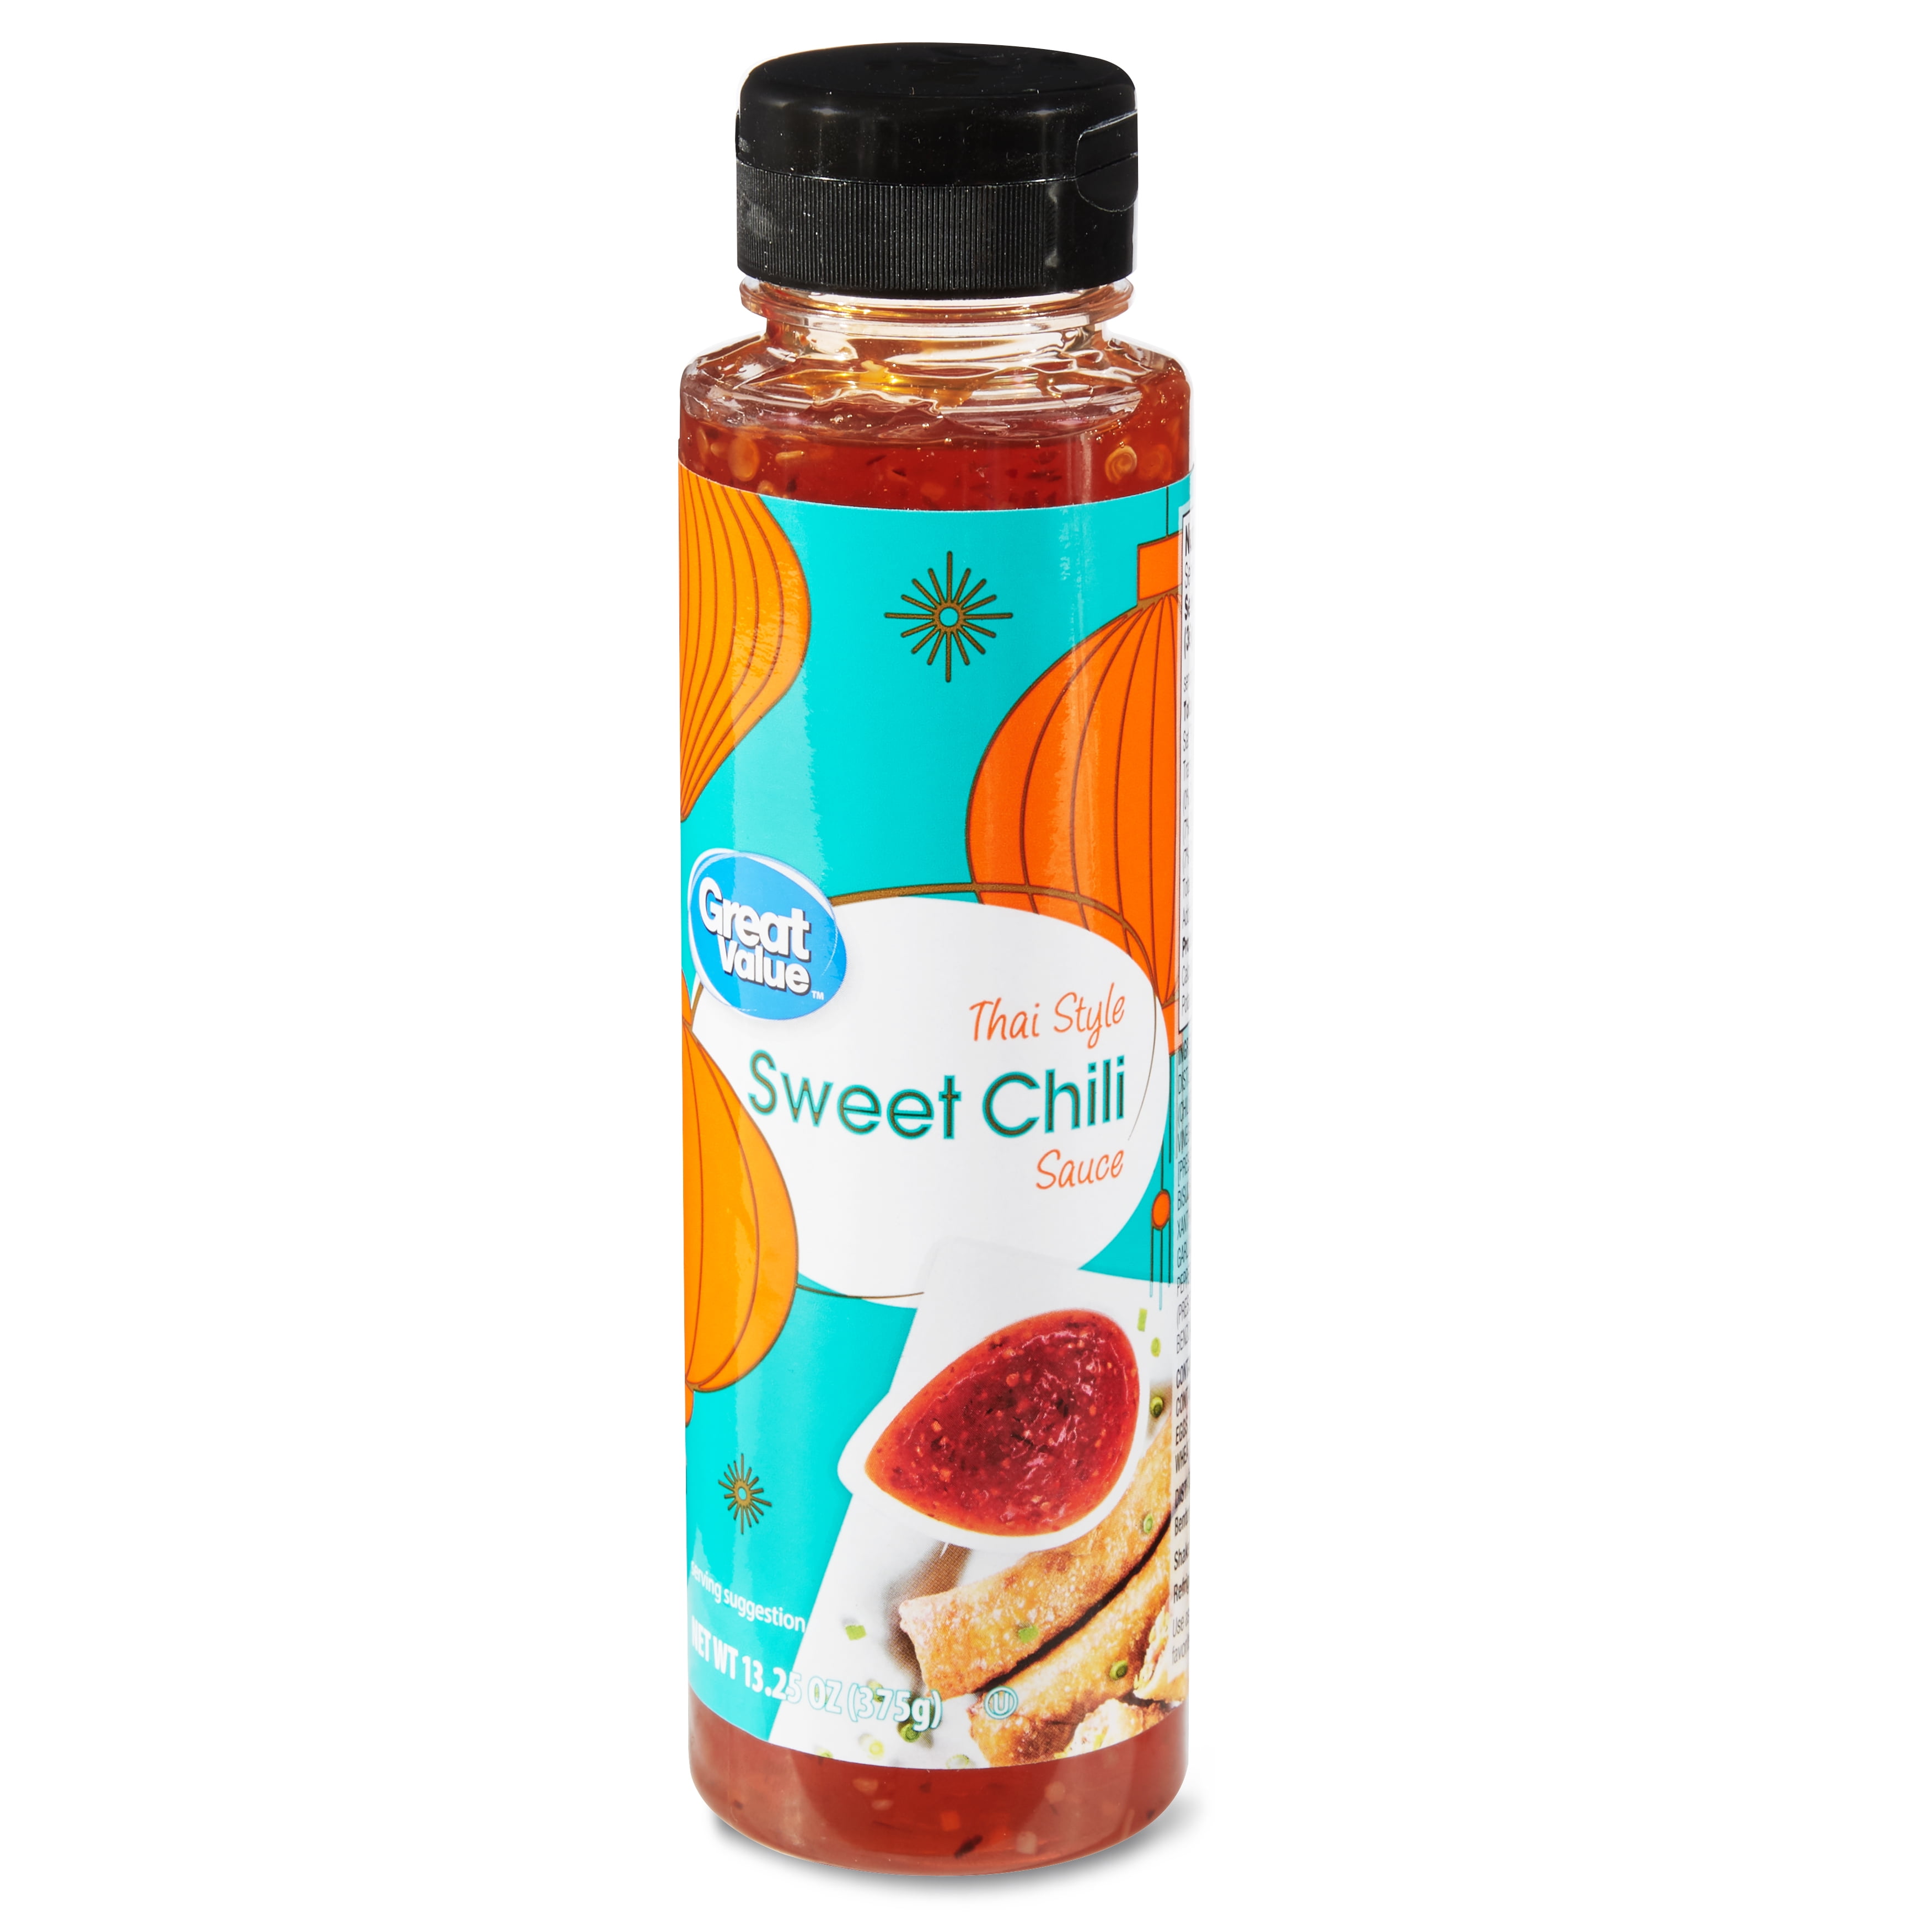 Great Value Thai Style Sweet Chili Sauce, 13.25 oz - Walmart.com